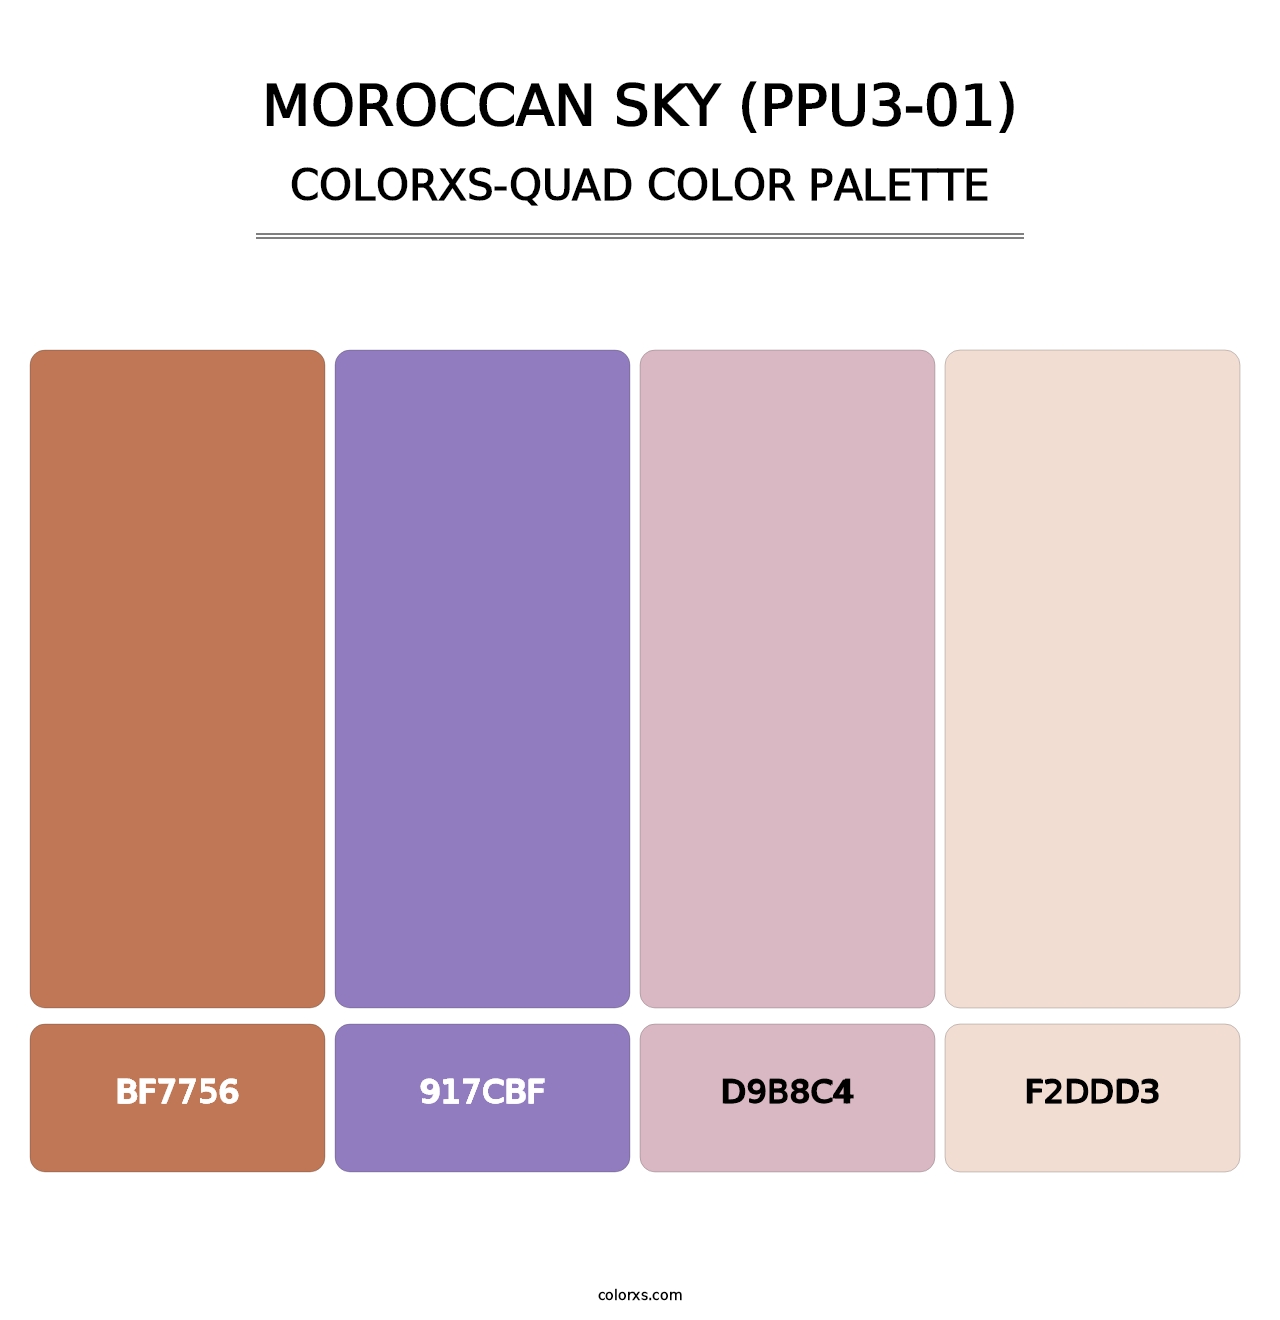 Moroccan Sky (PPU3-01) - Colorxs Quad Palette